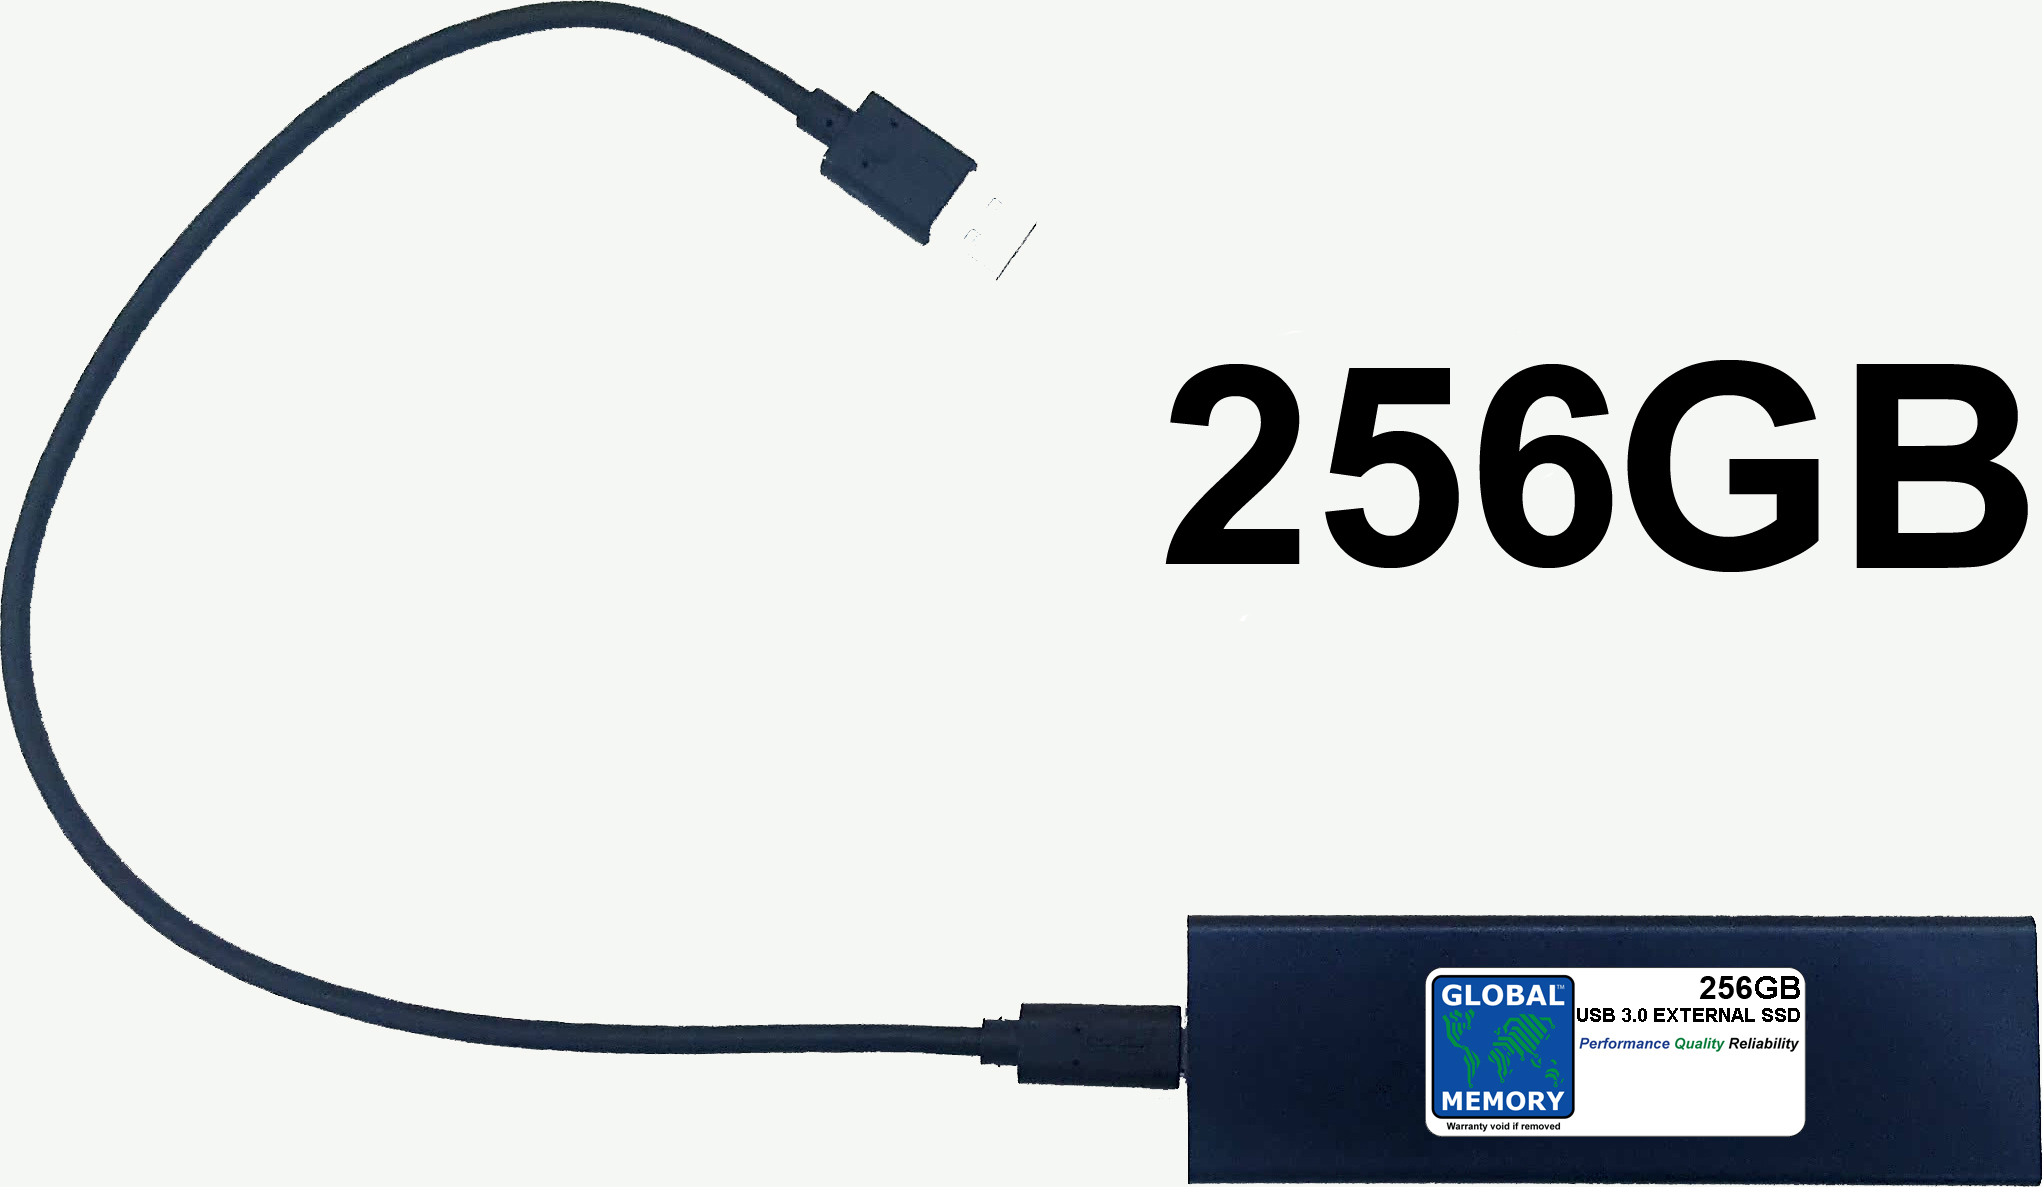 256GB M.2 2280 PCIe Gen3 x4 NVMe SSD EXTERNAL USB 3 FOR LAPTOPS / DESKTOP PCs / SERVERS / WORKSTATIONS